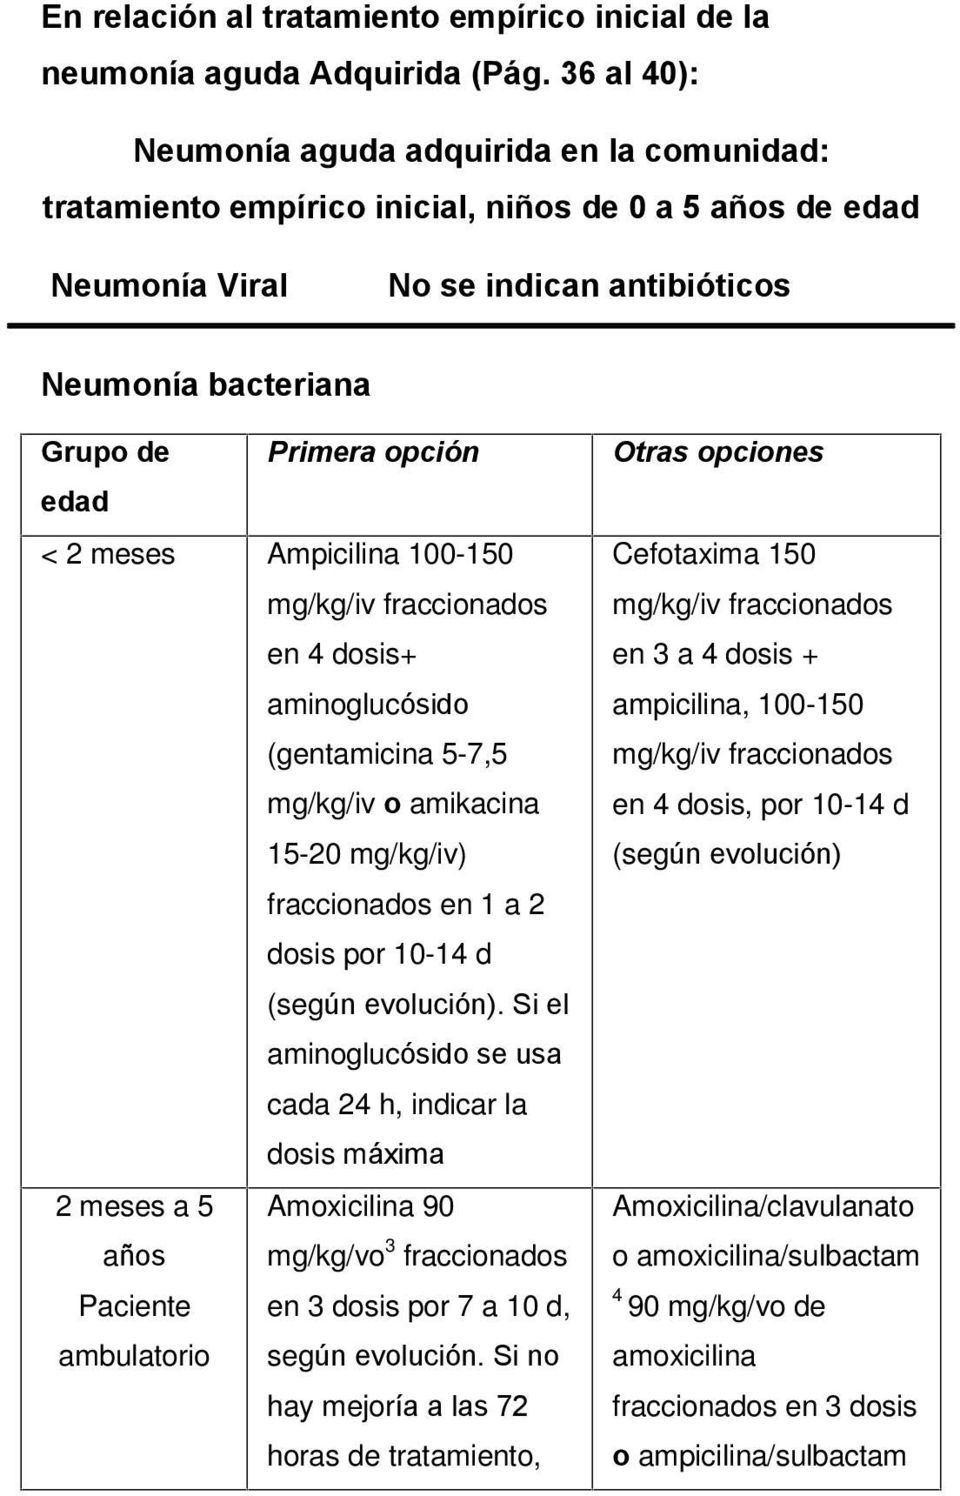 edad < 2 meses Ampicilina 100-150 fraccionados en 4 dosis+ aminoglucósido (gentamicina 5-7,5 o amikacina 15-20 ) fraccionados en 1 a 2 dosis por 10-14 d (según evolución).